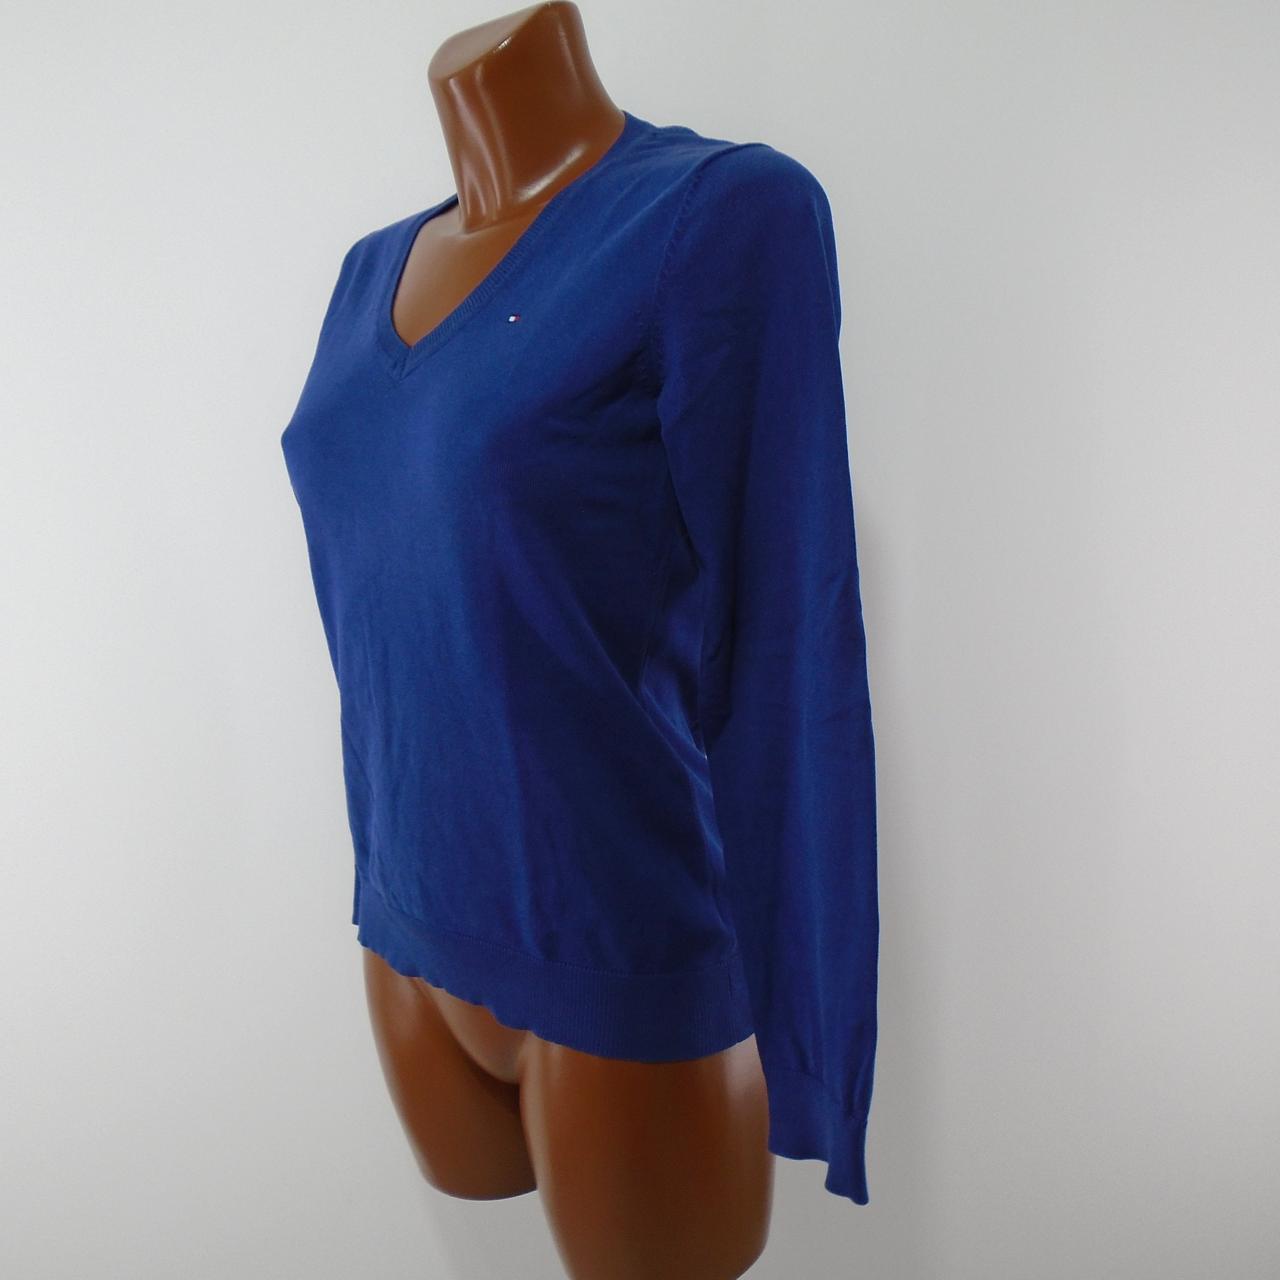 Women's Sweater Tommy Hilfiger. Dark blue. M. Used. Good